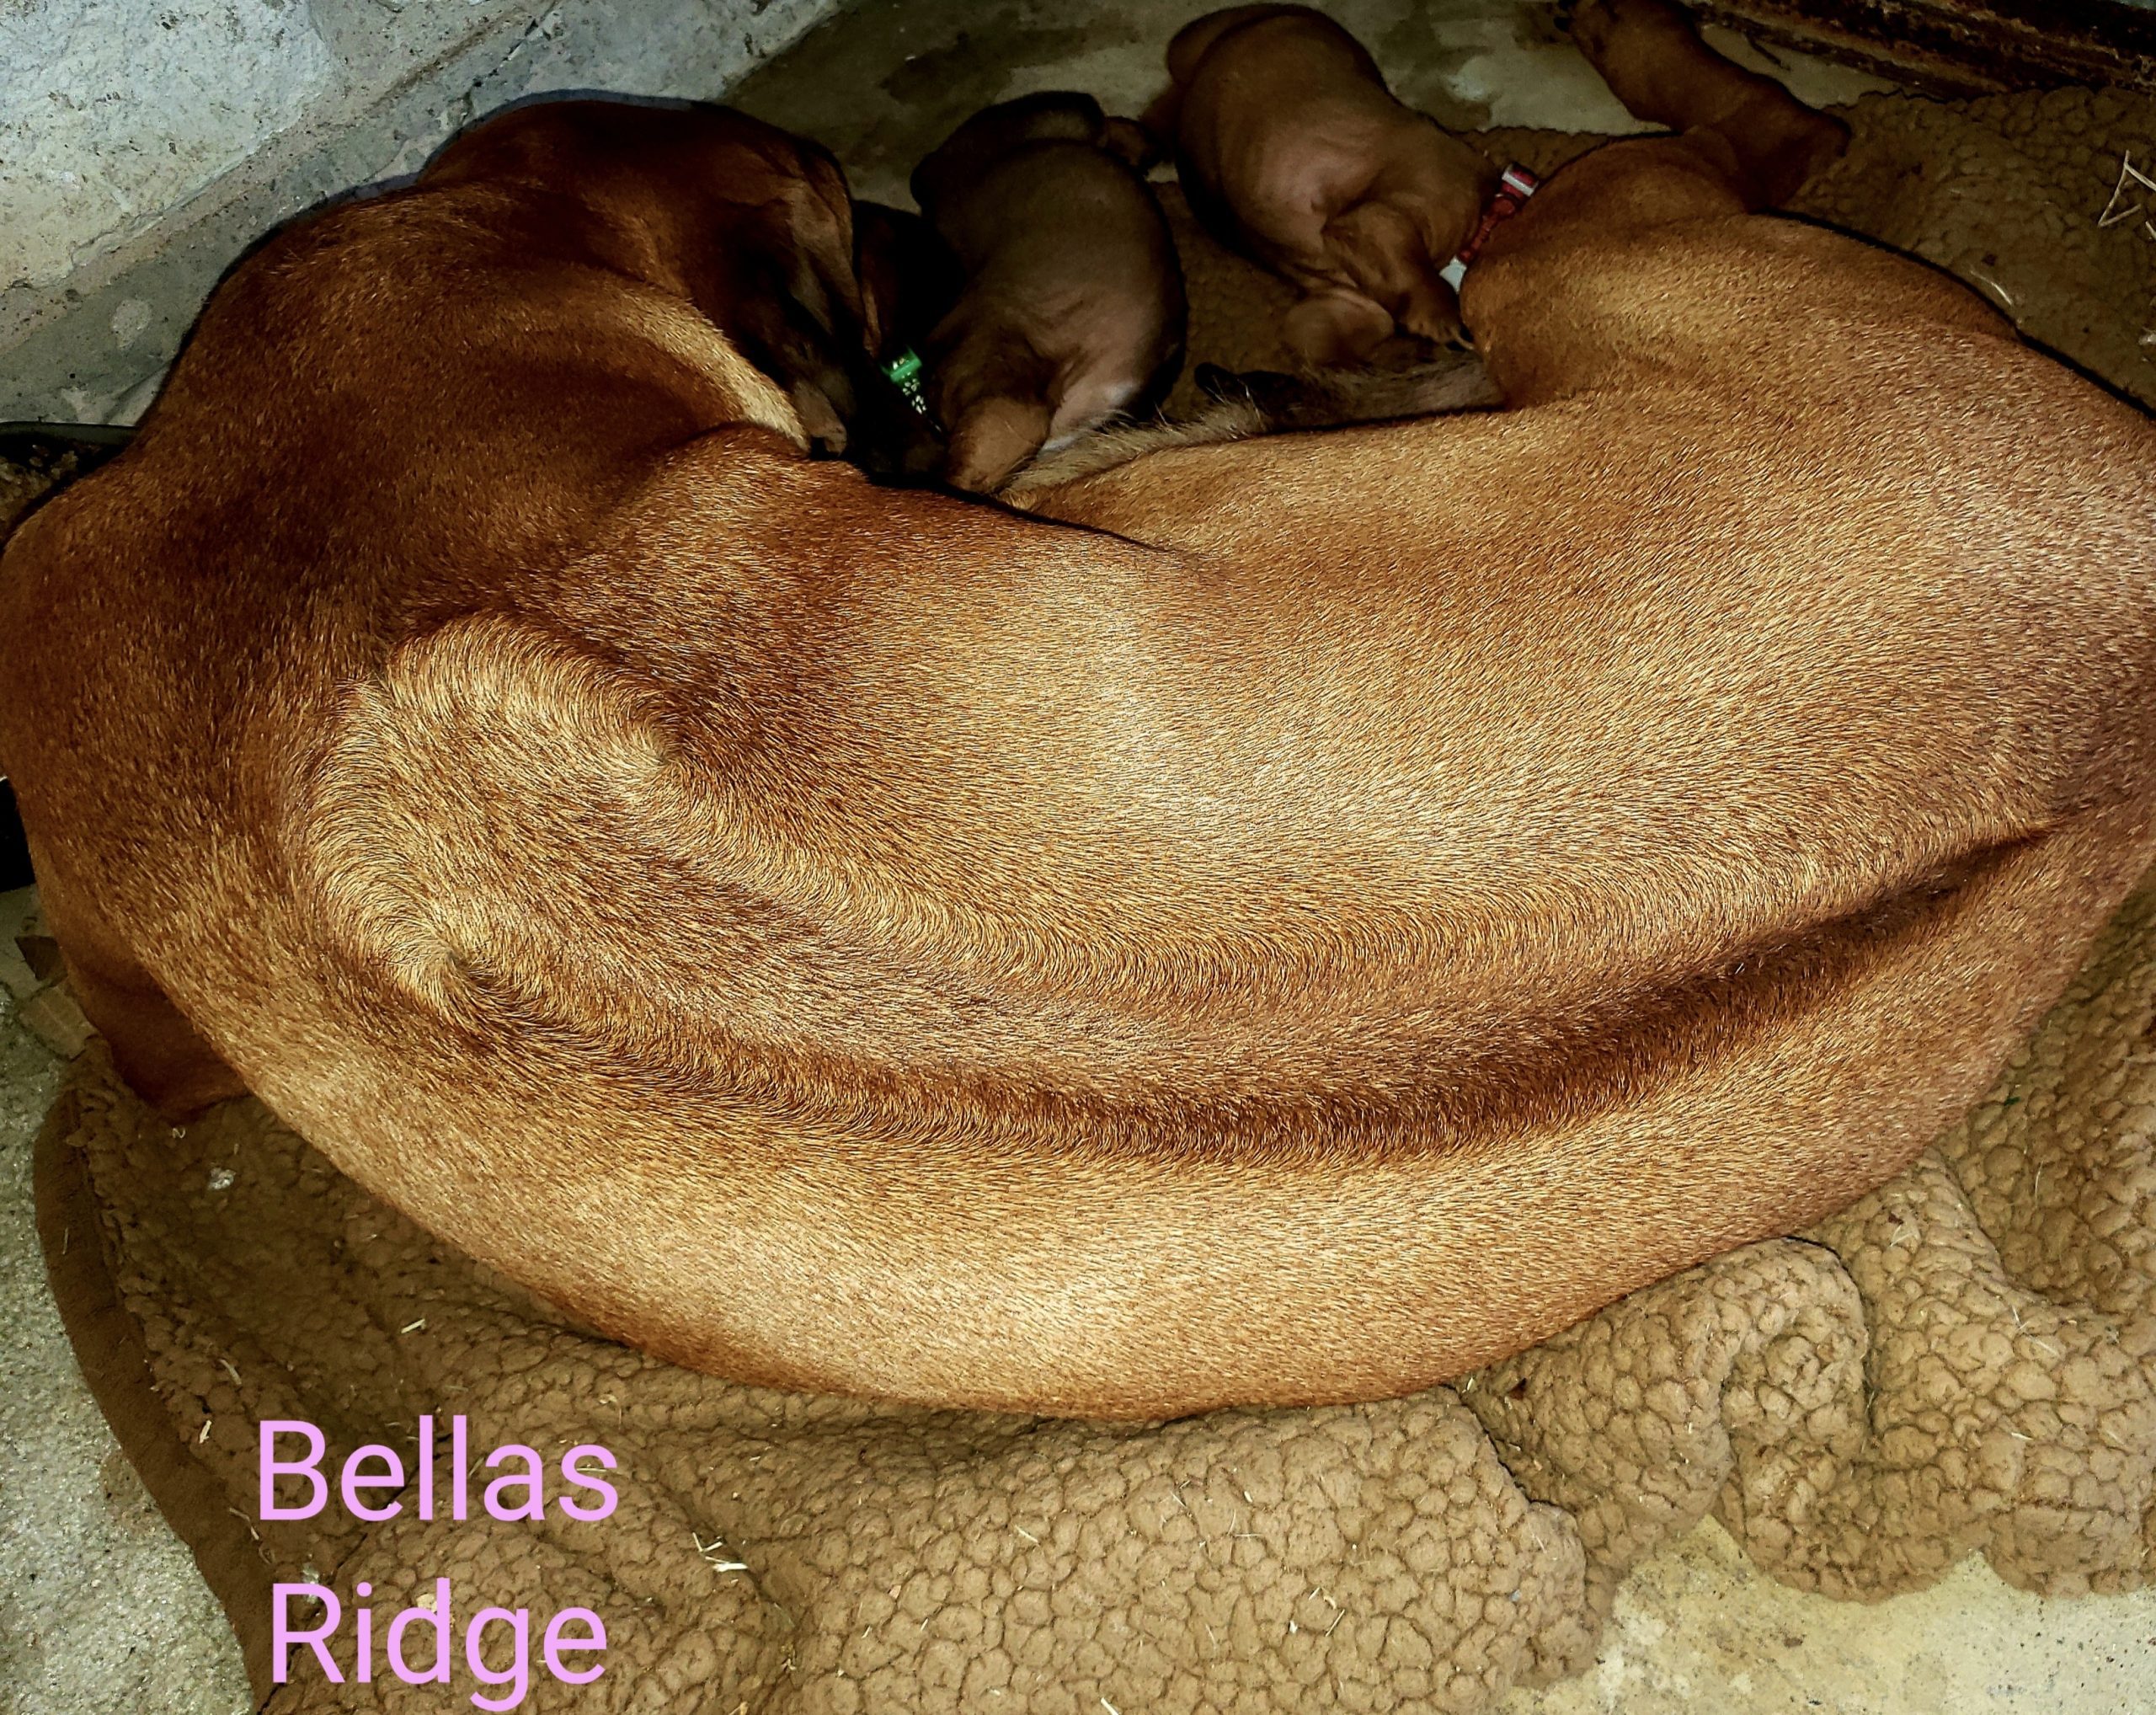 Bella's beautiful ridge